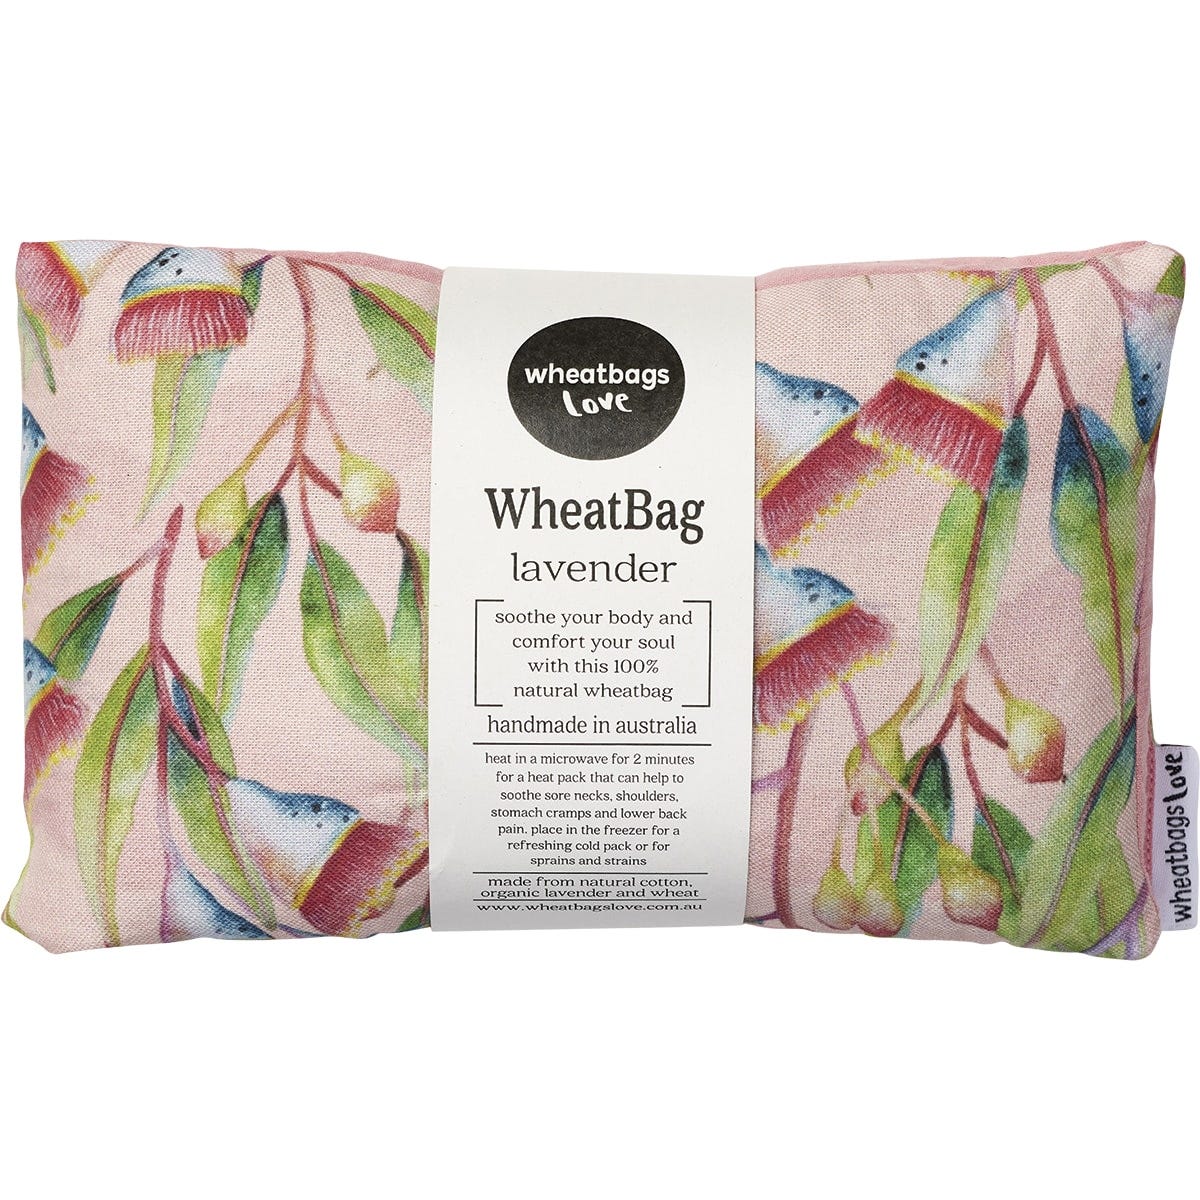 Wheatbags Love Wheatbag Gum Blossom Lavender Scented - Dr Earth - Sleep & Relax, Pain Relief